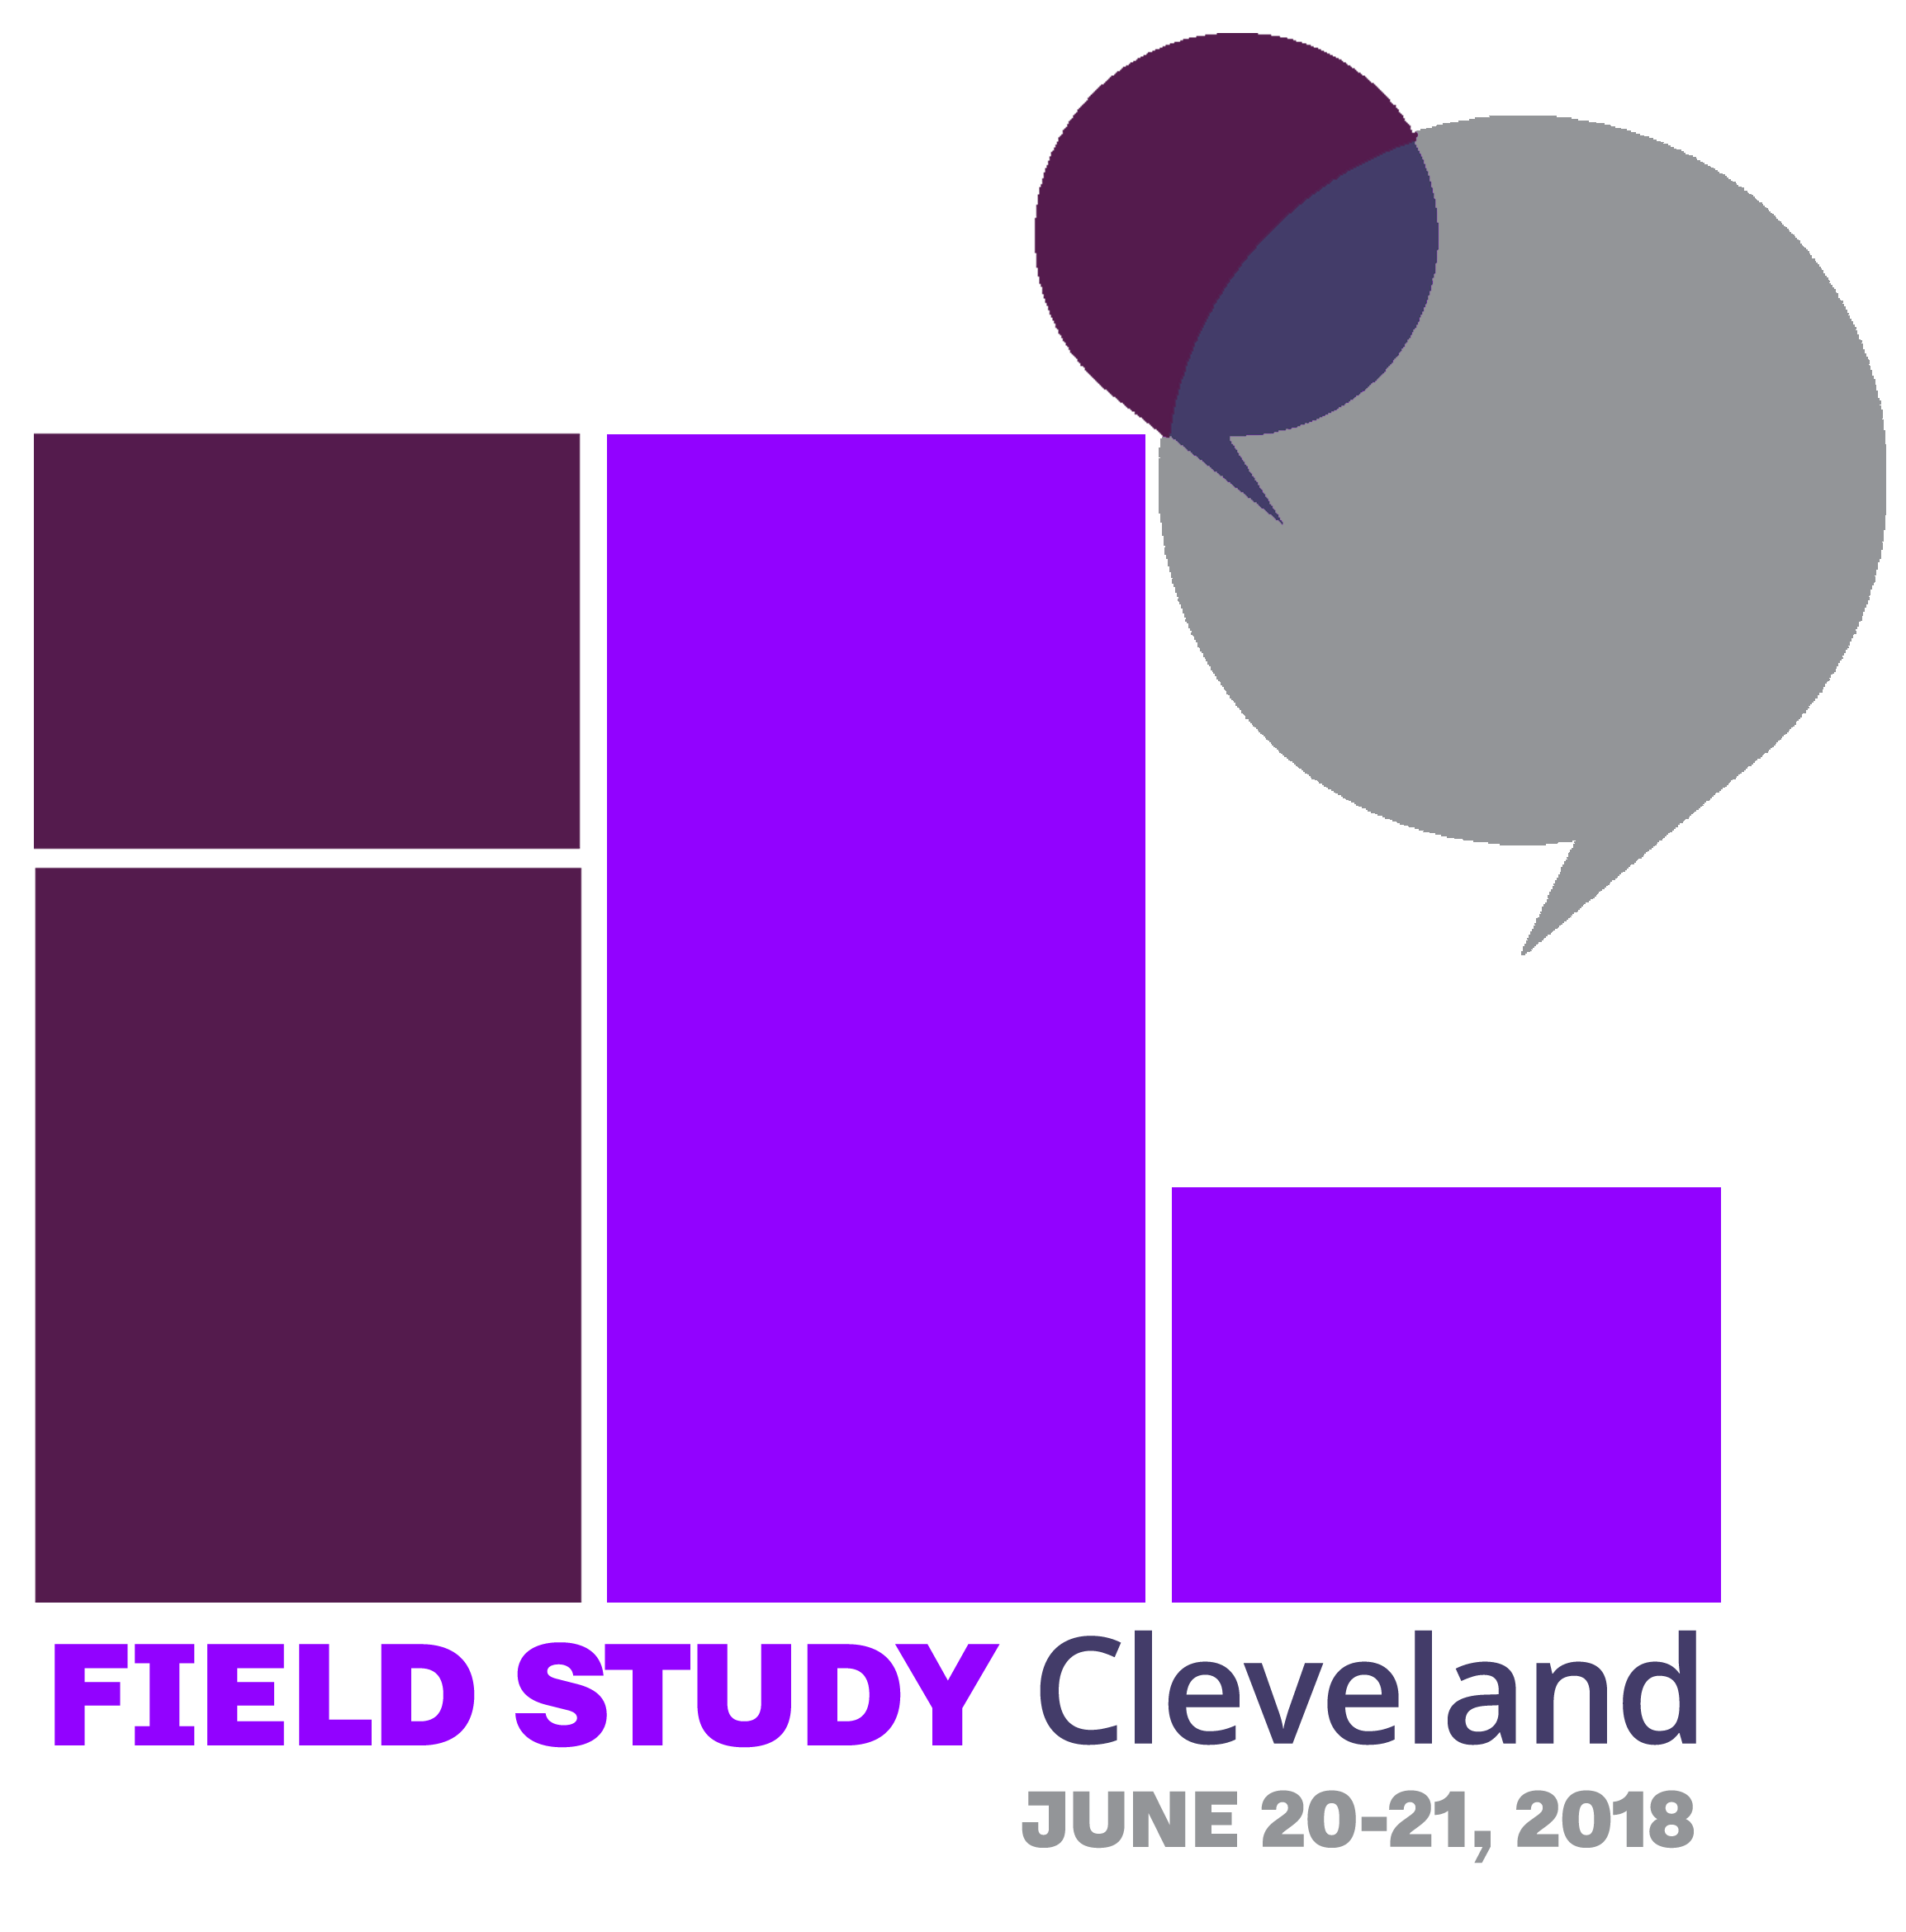 study clipart field study